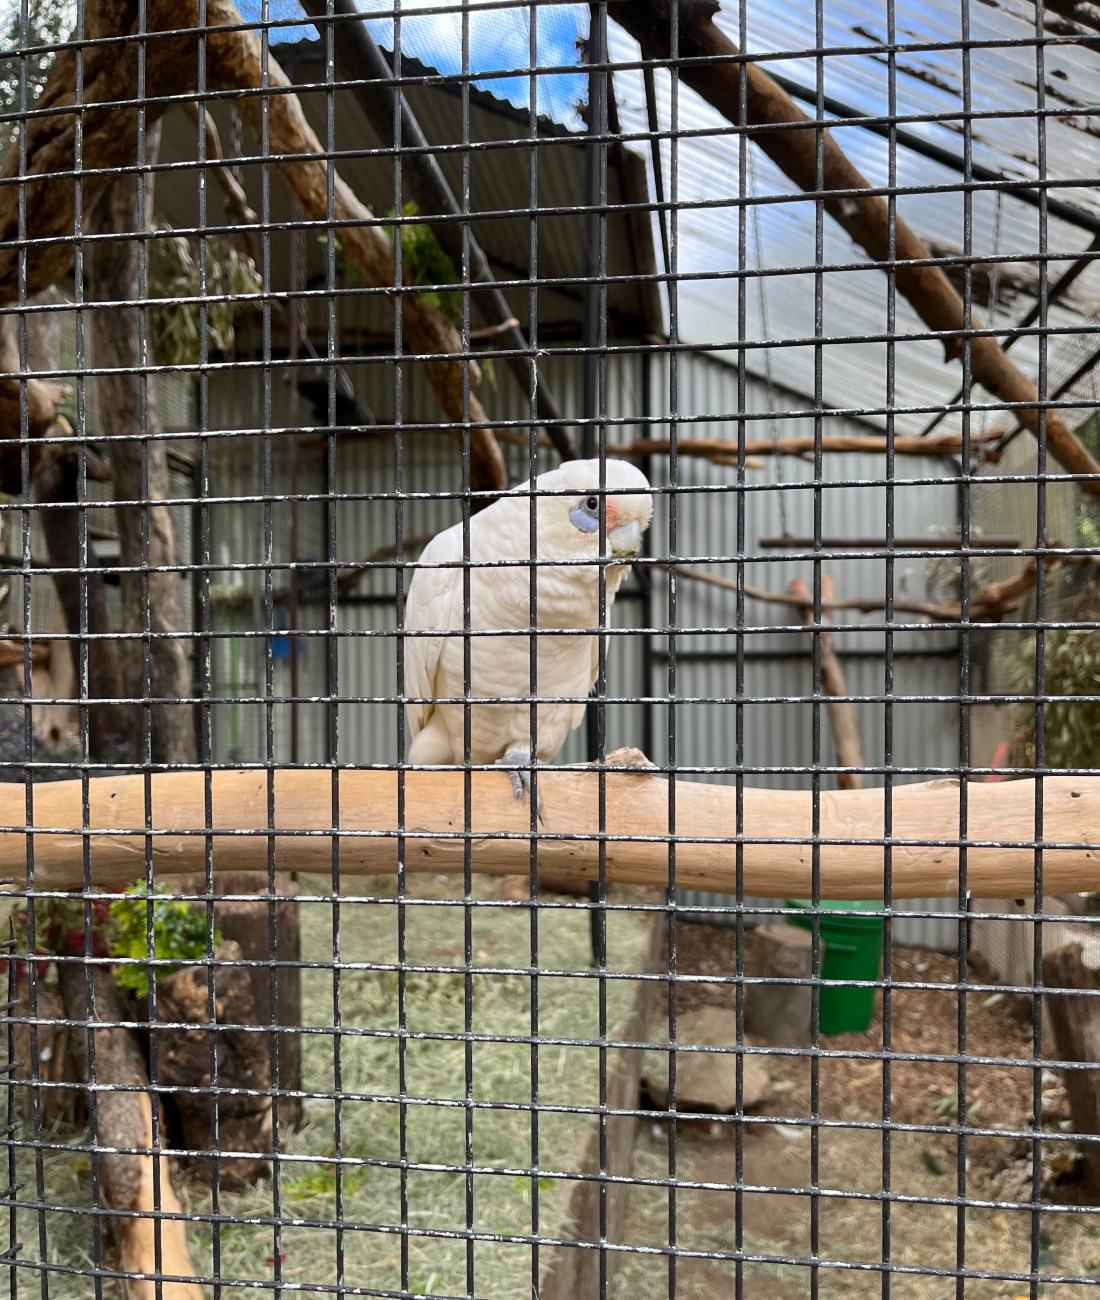 Marsupial park 鸚鵡